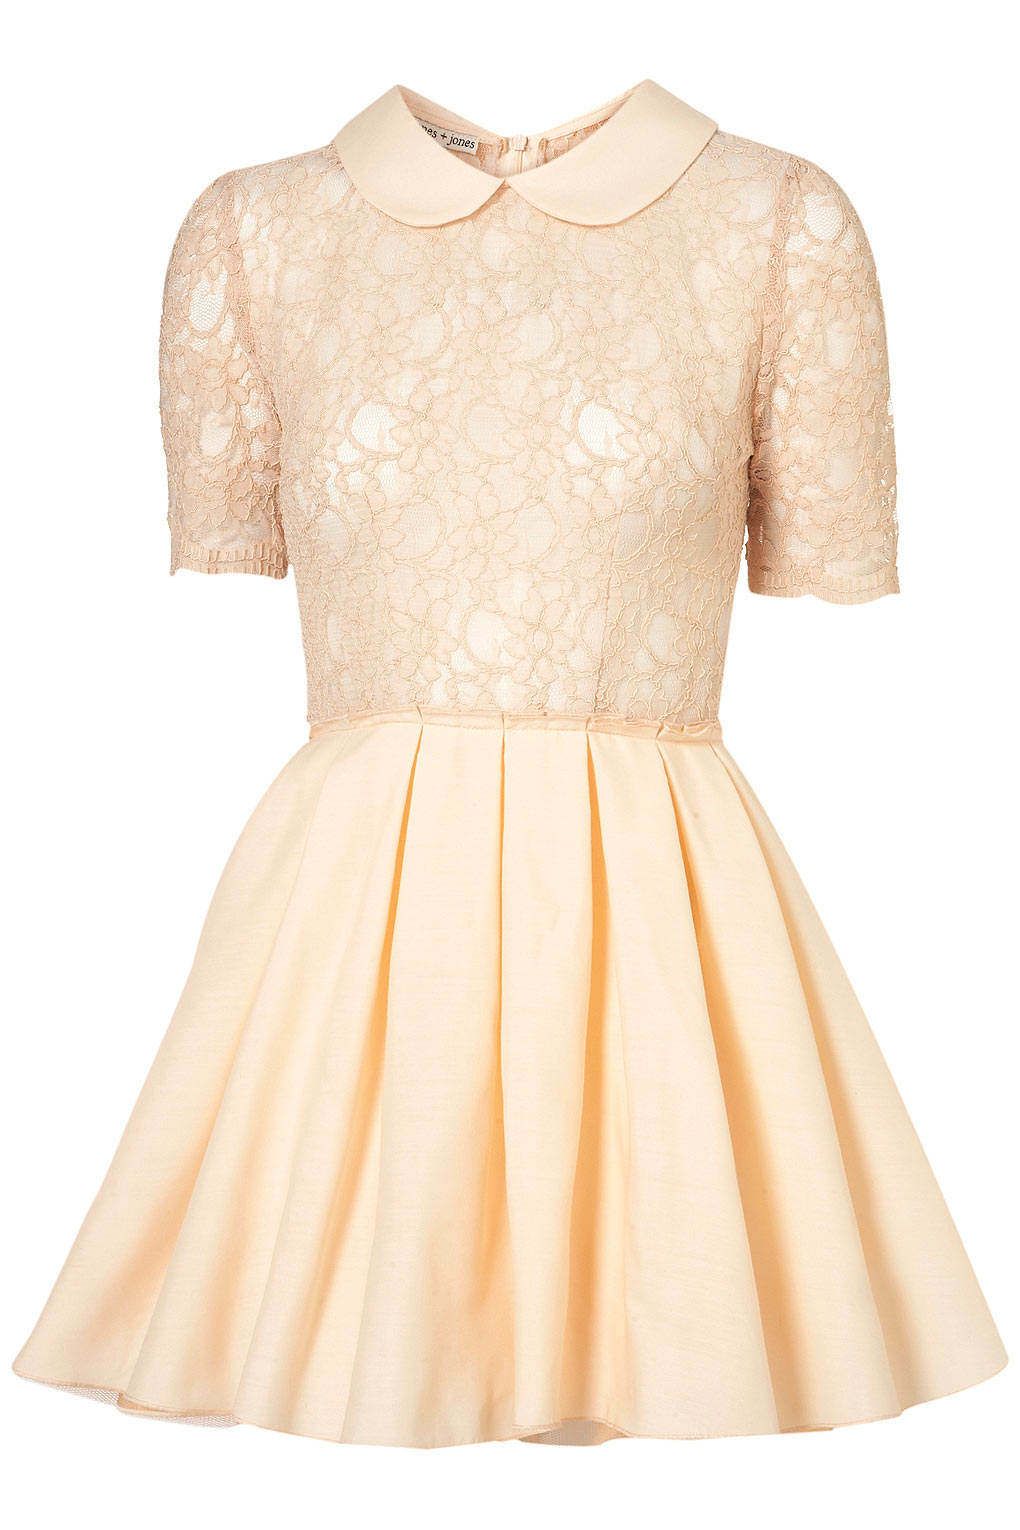 Topshop Poppy Lace Dress By Jones and Jones** in Orange (peach) | Lyst